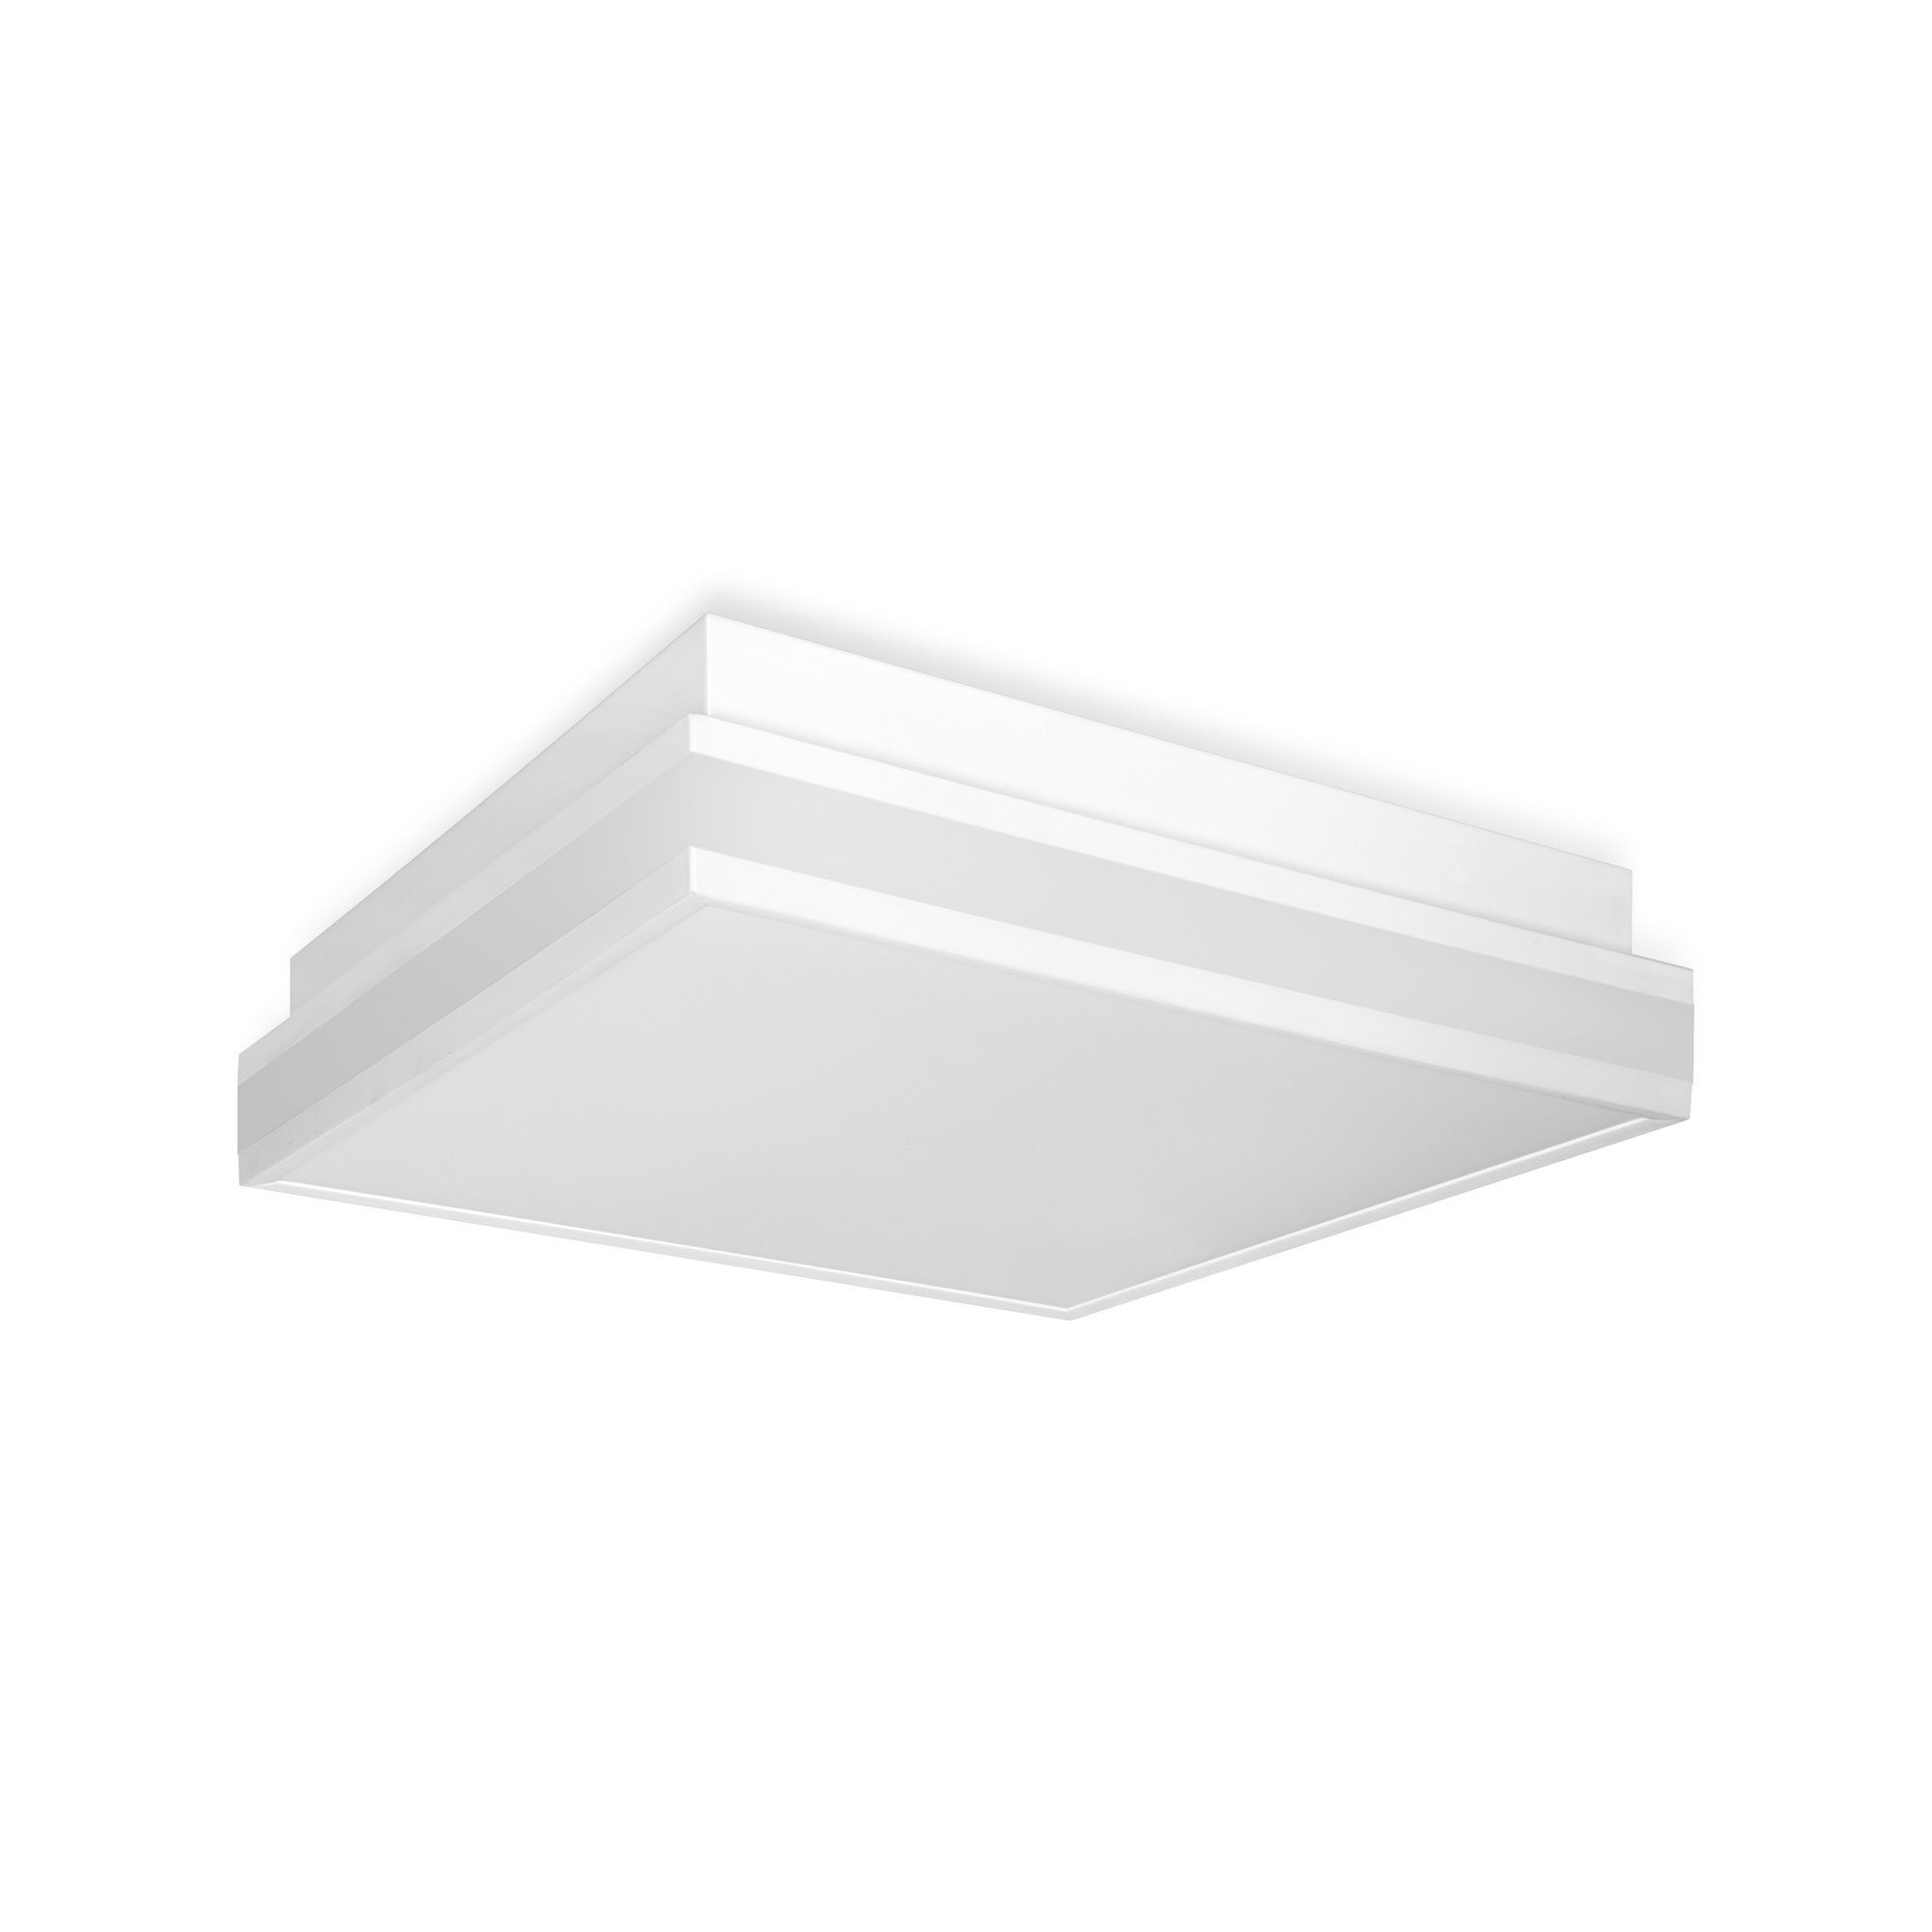 LEDVANCE SMART+ WiFi Tunable White LED Ceiling Light ORBIS MAGNET 300x300mm white 2500lm